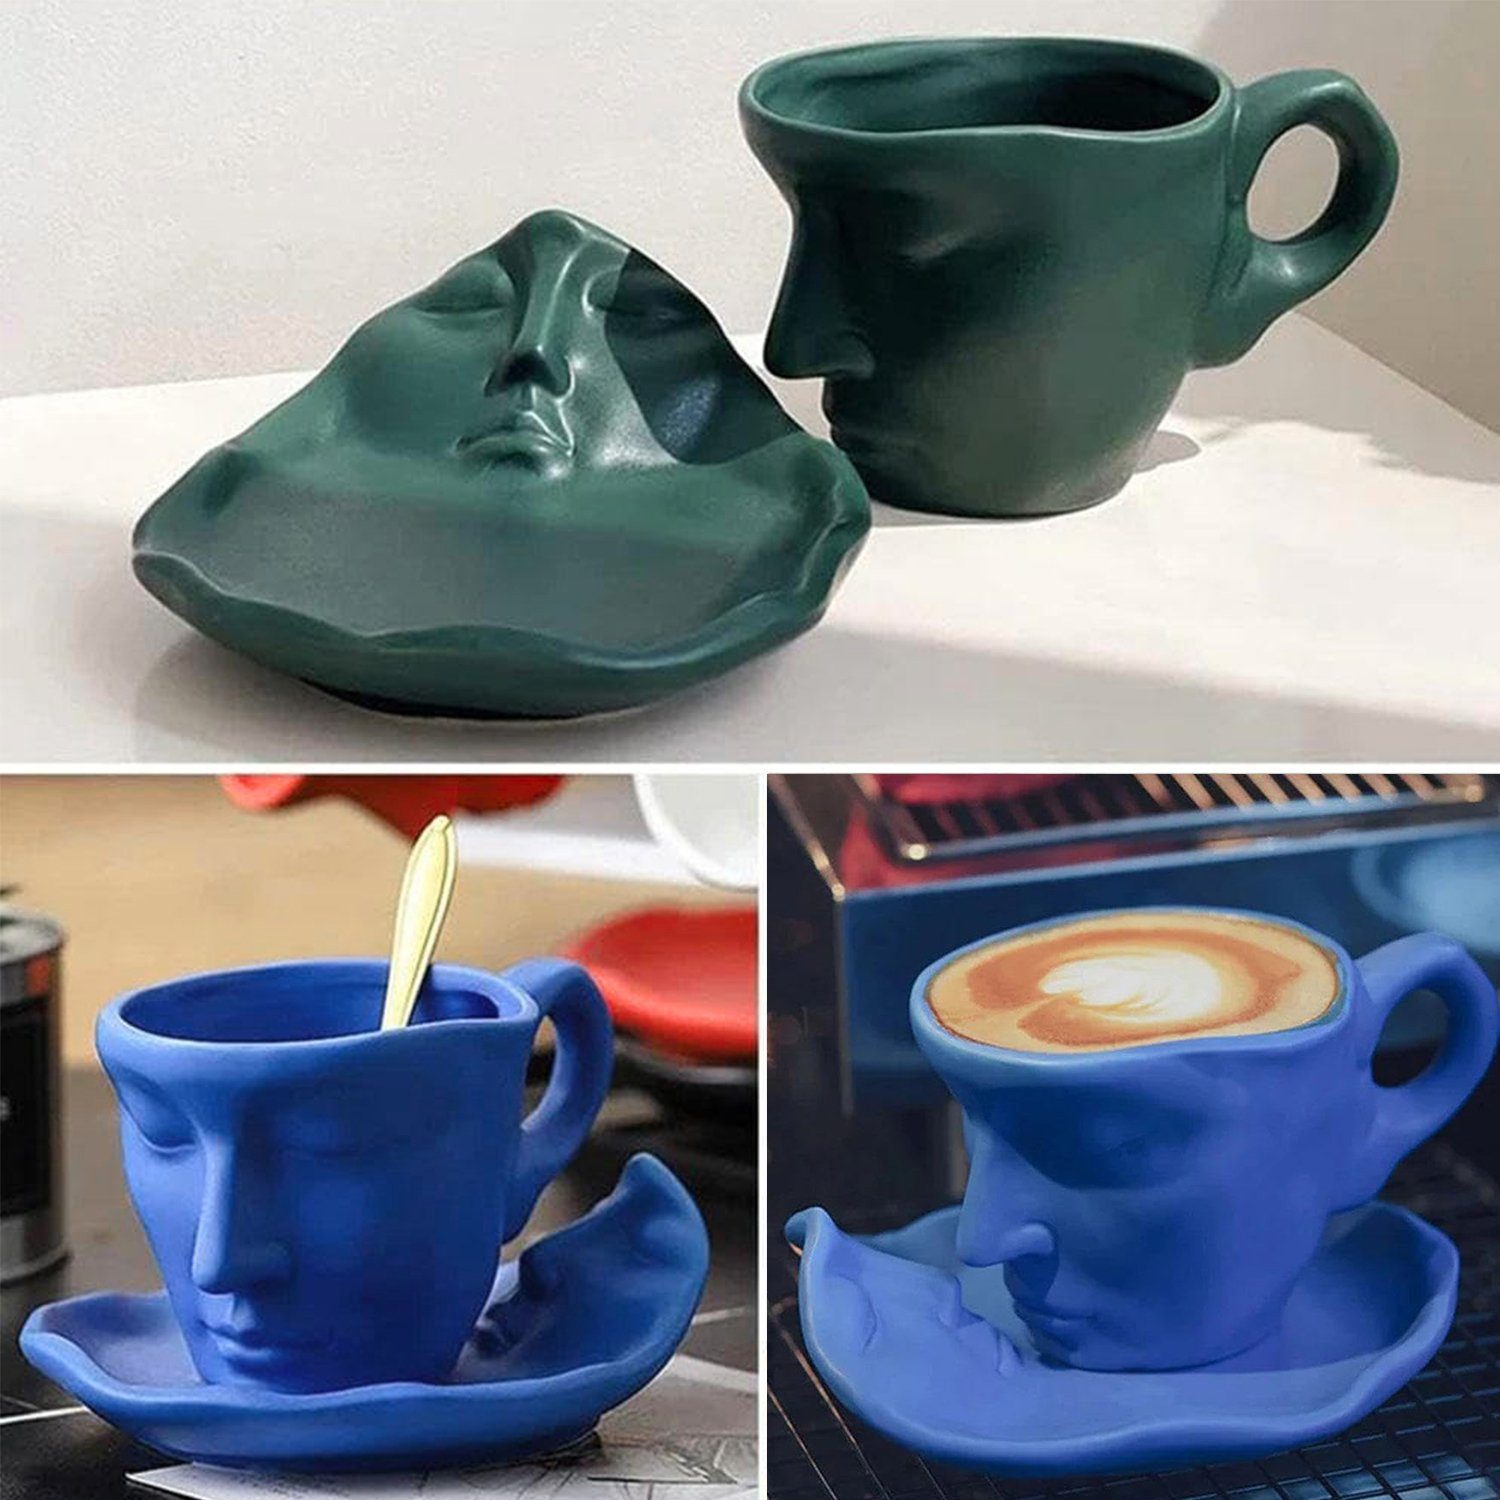 MAGICSHE Kaffeeservice Schwarz Untertasse Kaffeetasse Gesichtskuss Keramik Set, & 1 Personen